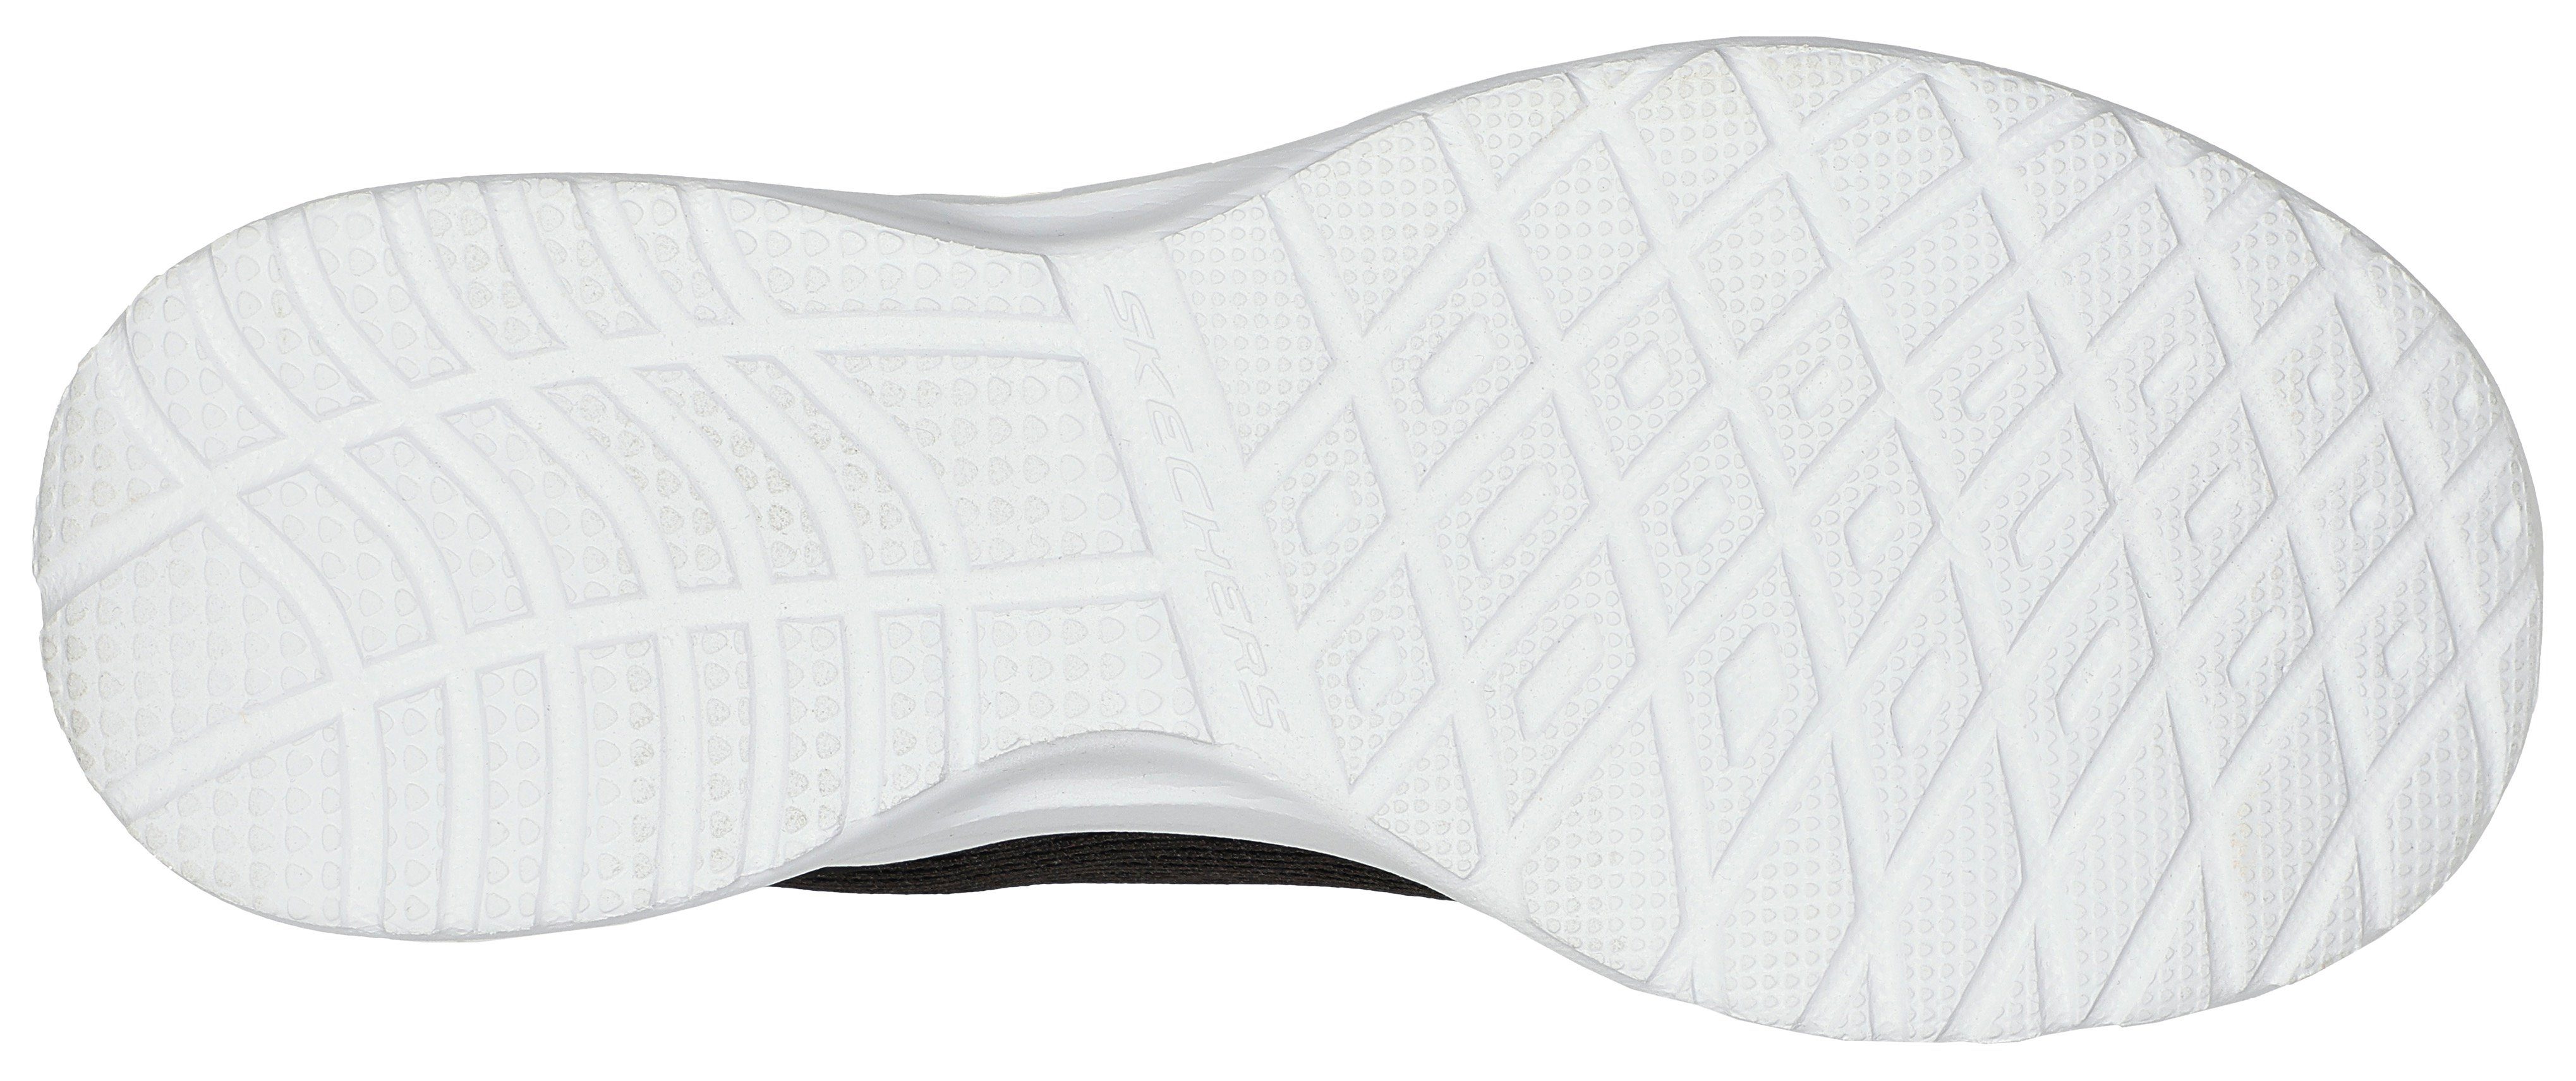 SKECH-AIR Sneaker an Skechers DYNAMIGHT Ferse der LAID Print OUT schwarz-meliert mit buntem